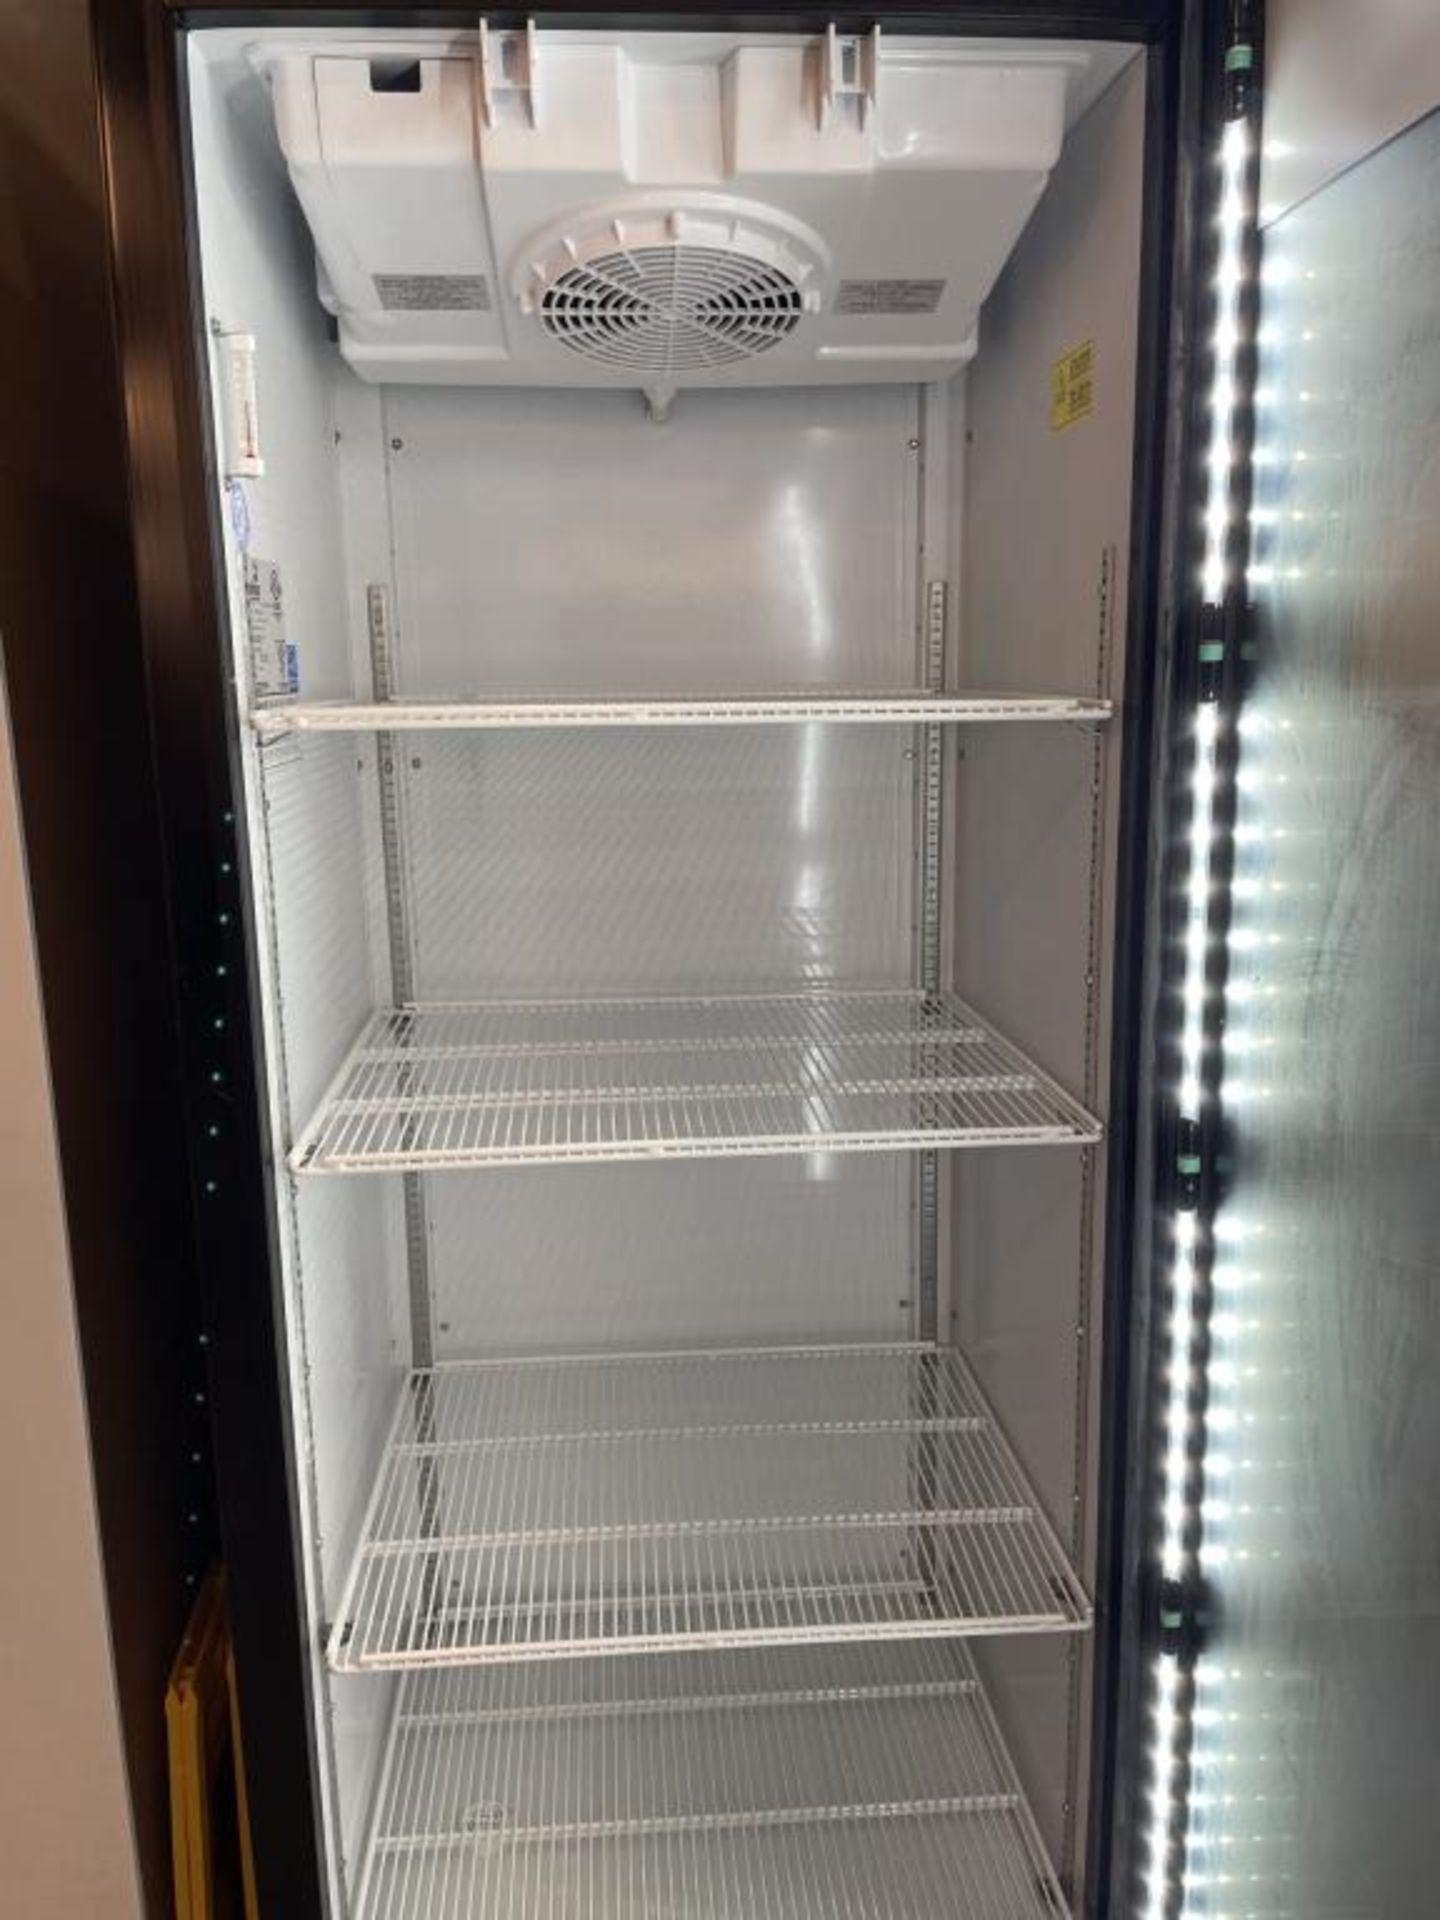 Imbera G319 Deli Refrigerator - Image 4 of 5